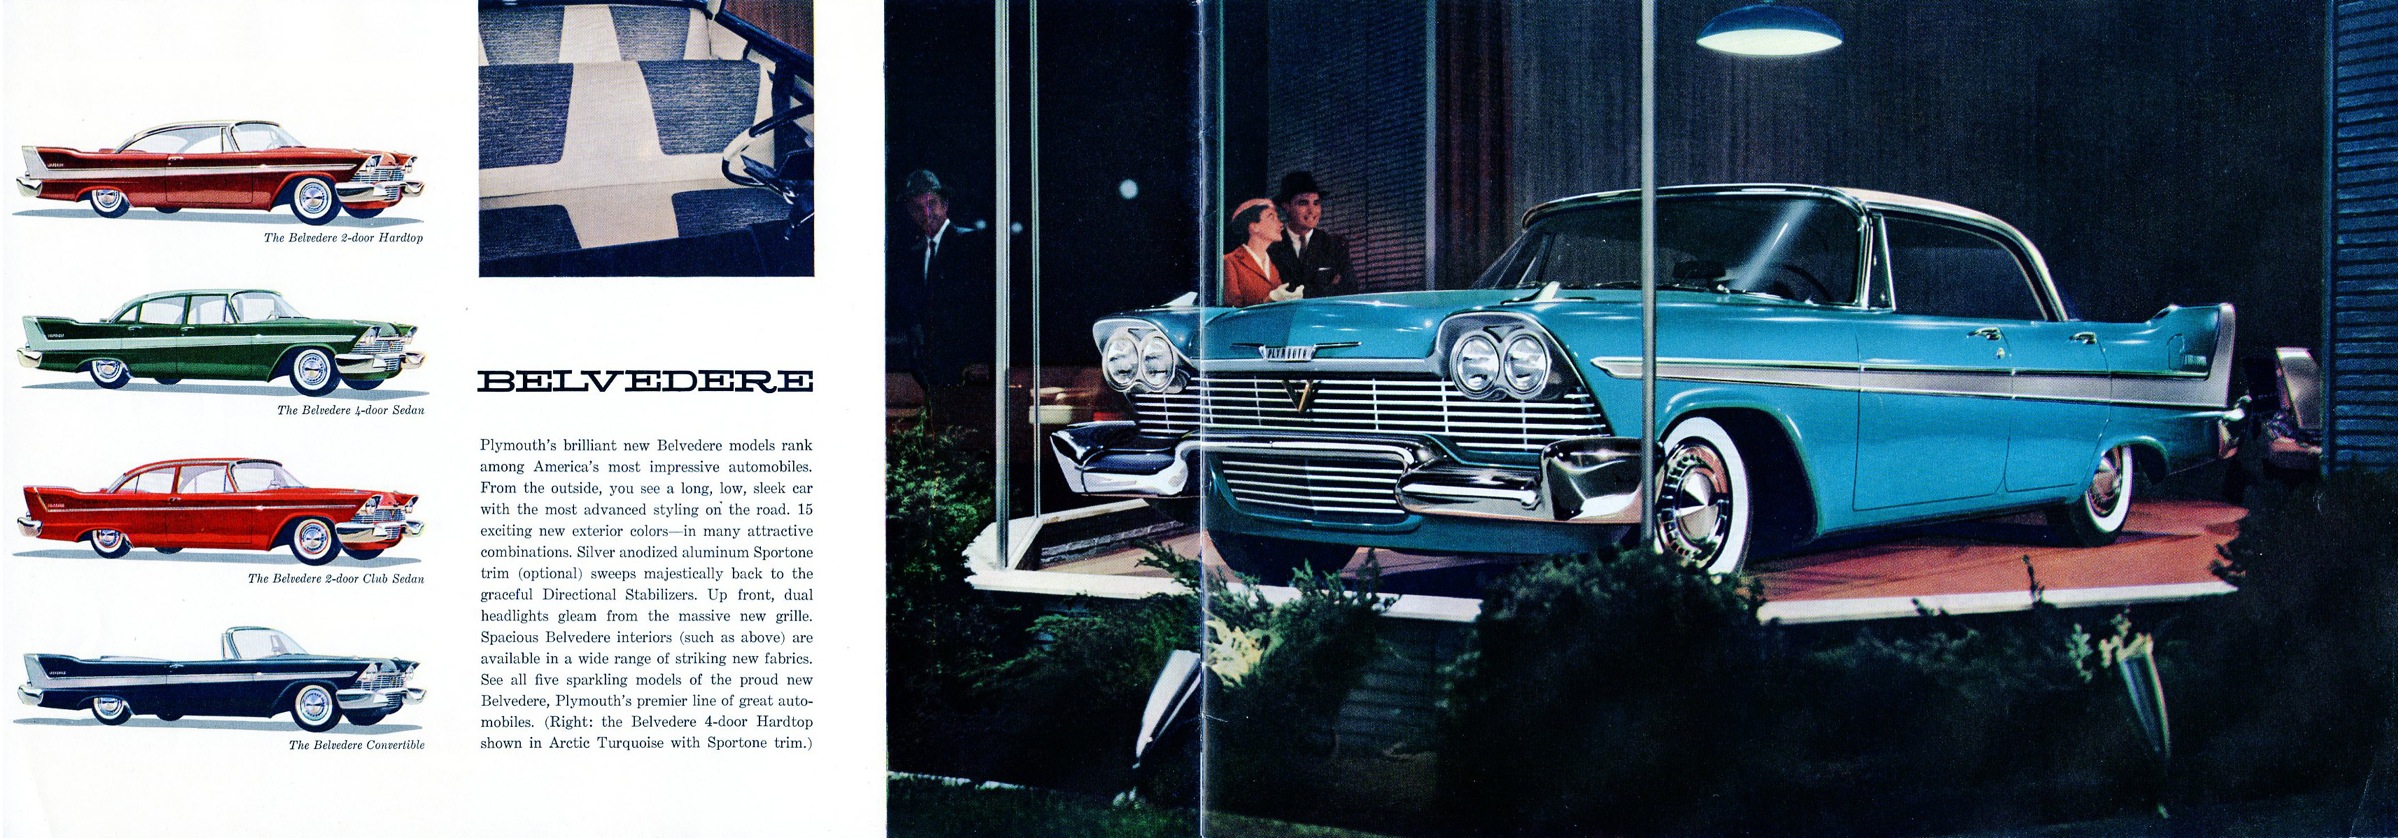 1958 Plymouth Brochure-04-05